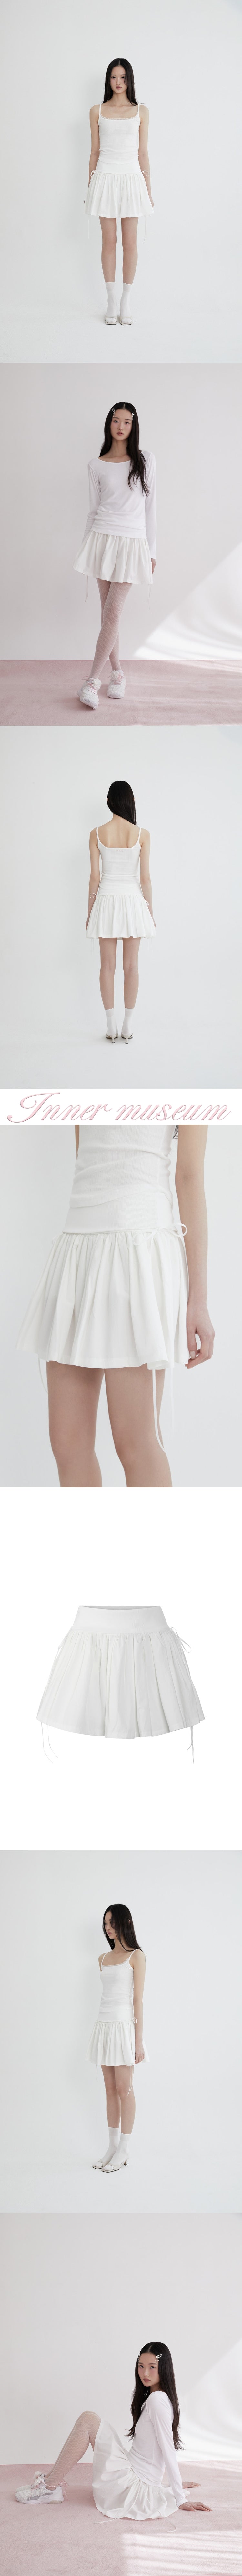 Ribbon tie cotton shirring skirt (WHITE)